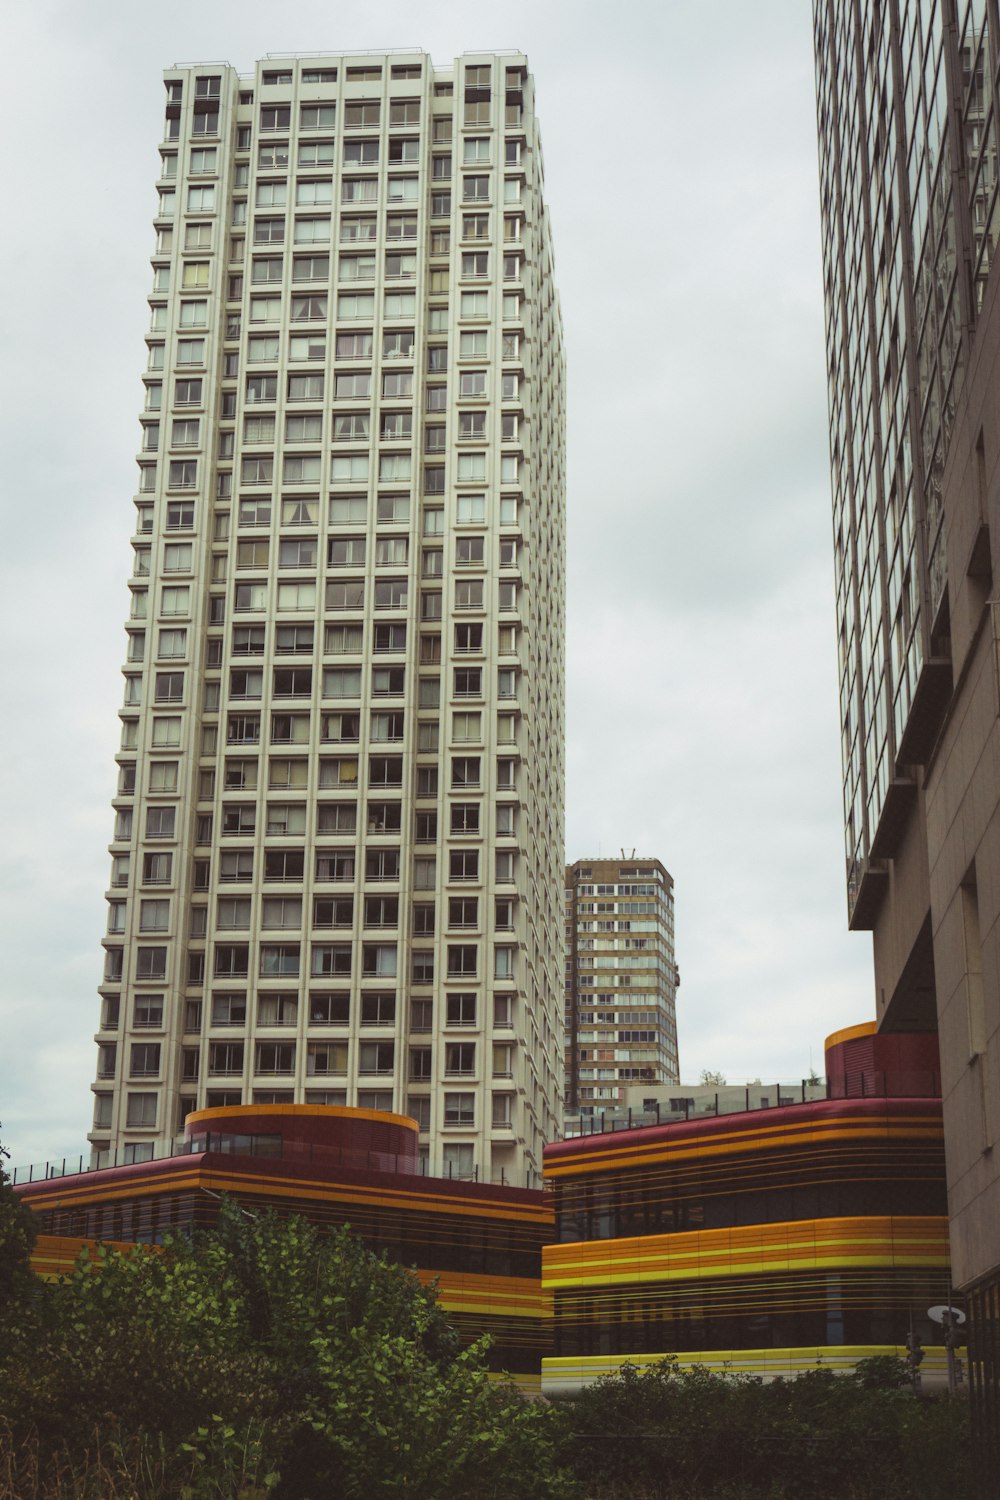 Un edificio alto con muchas ventanas